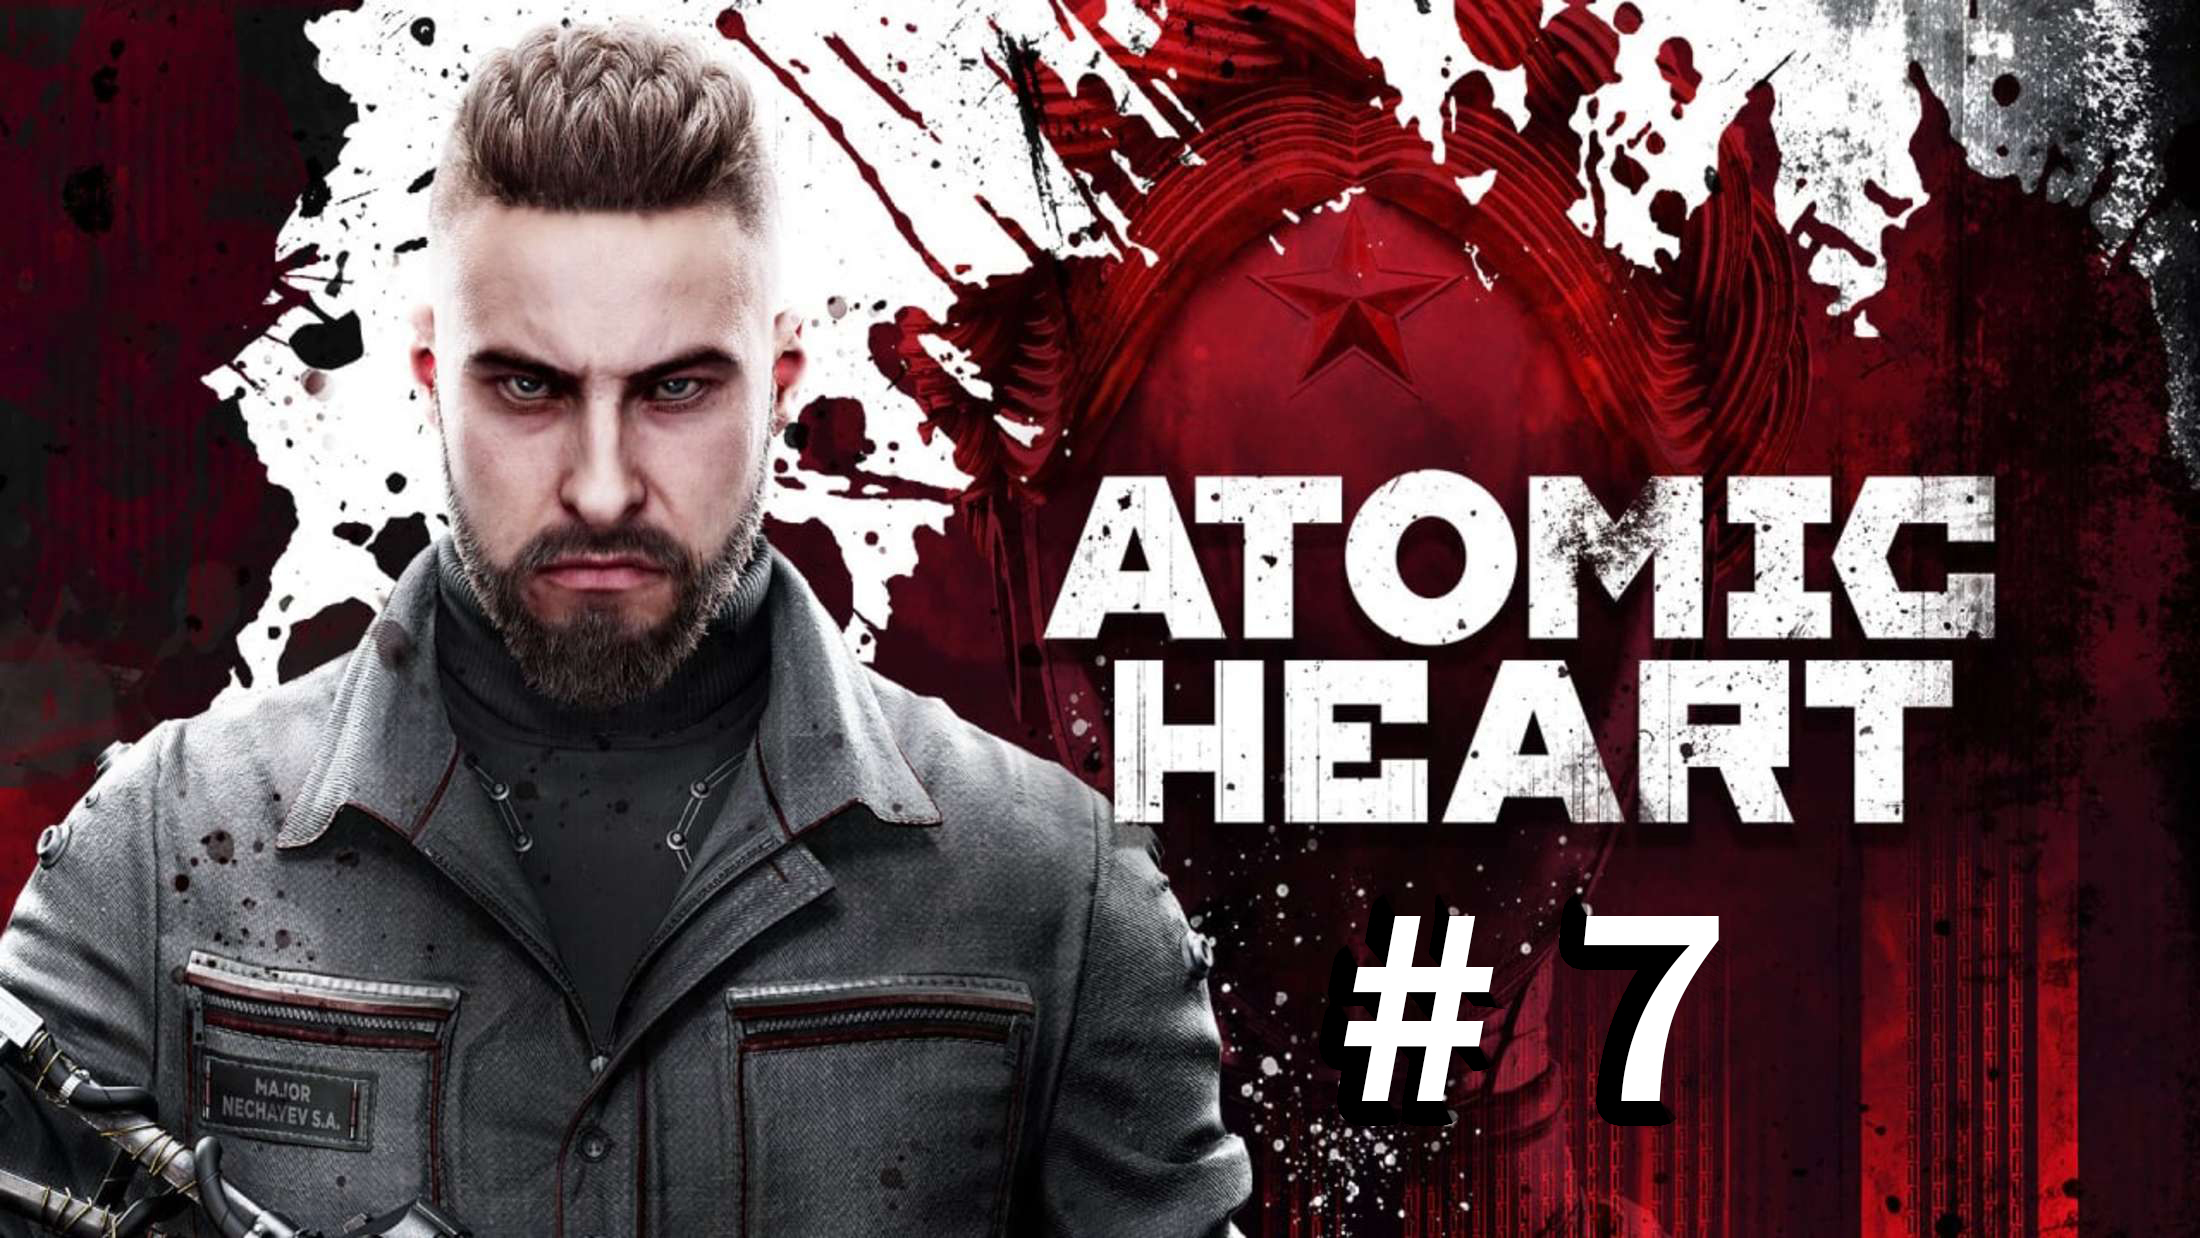 Atomic Heart # 7